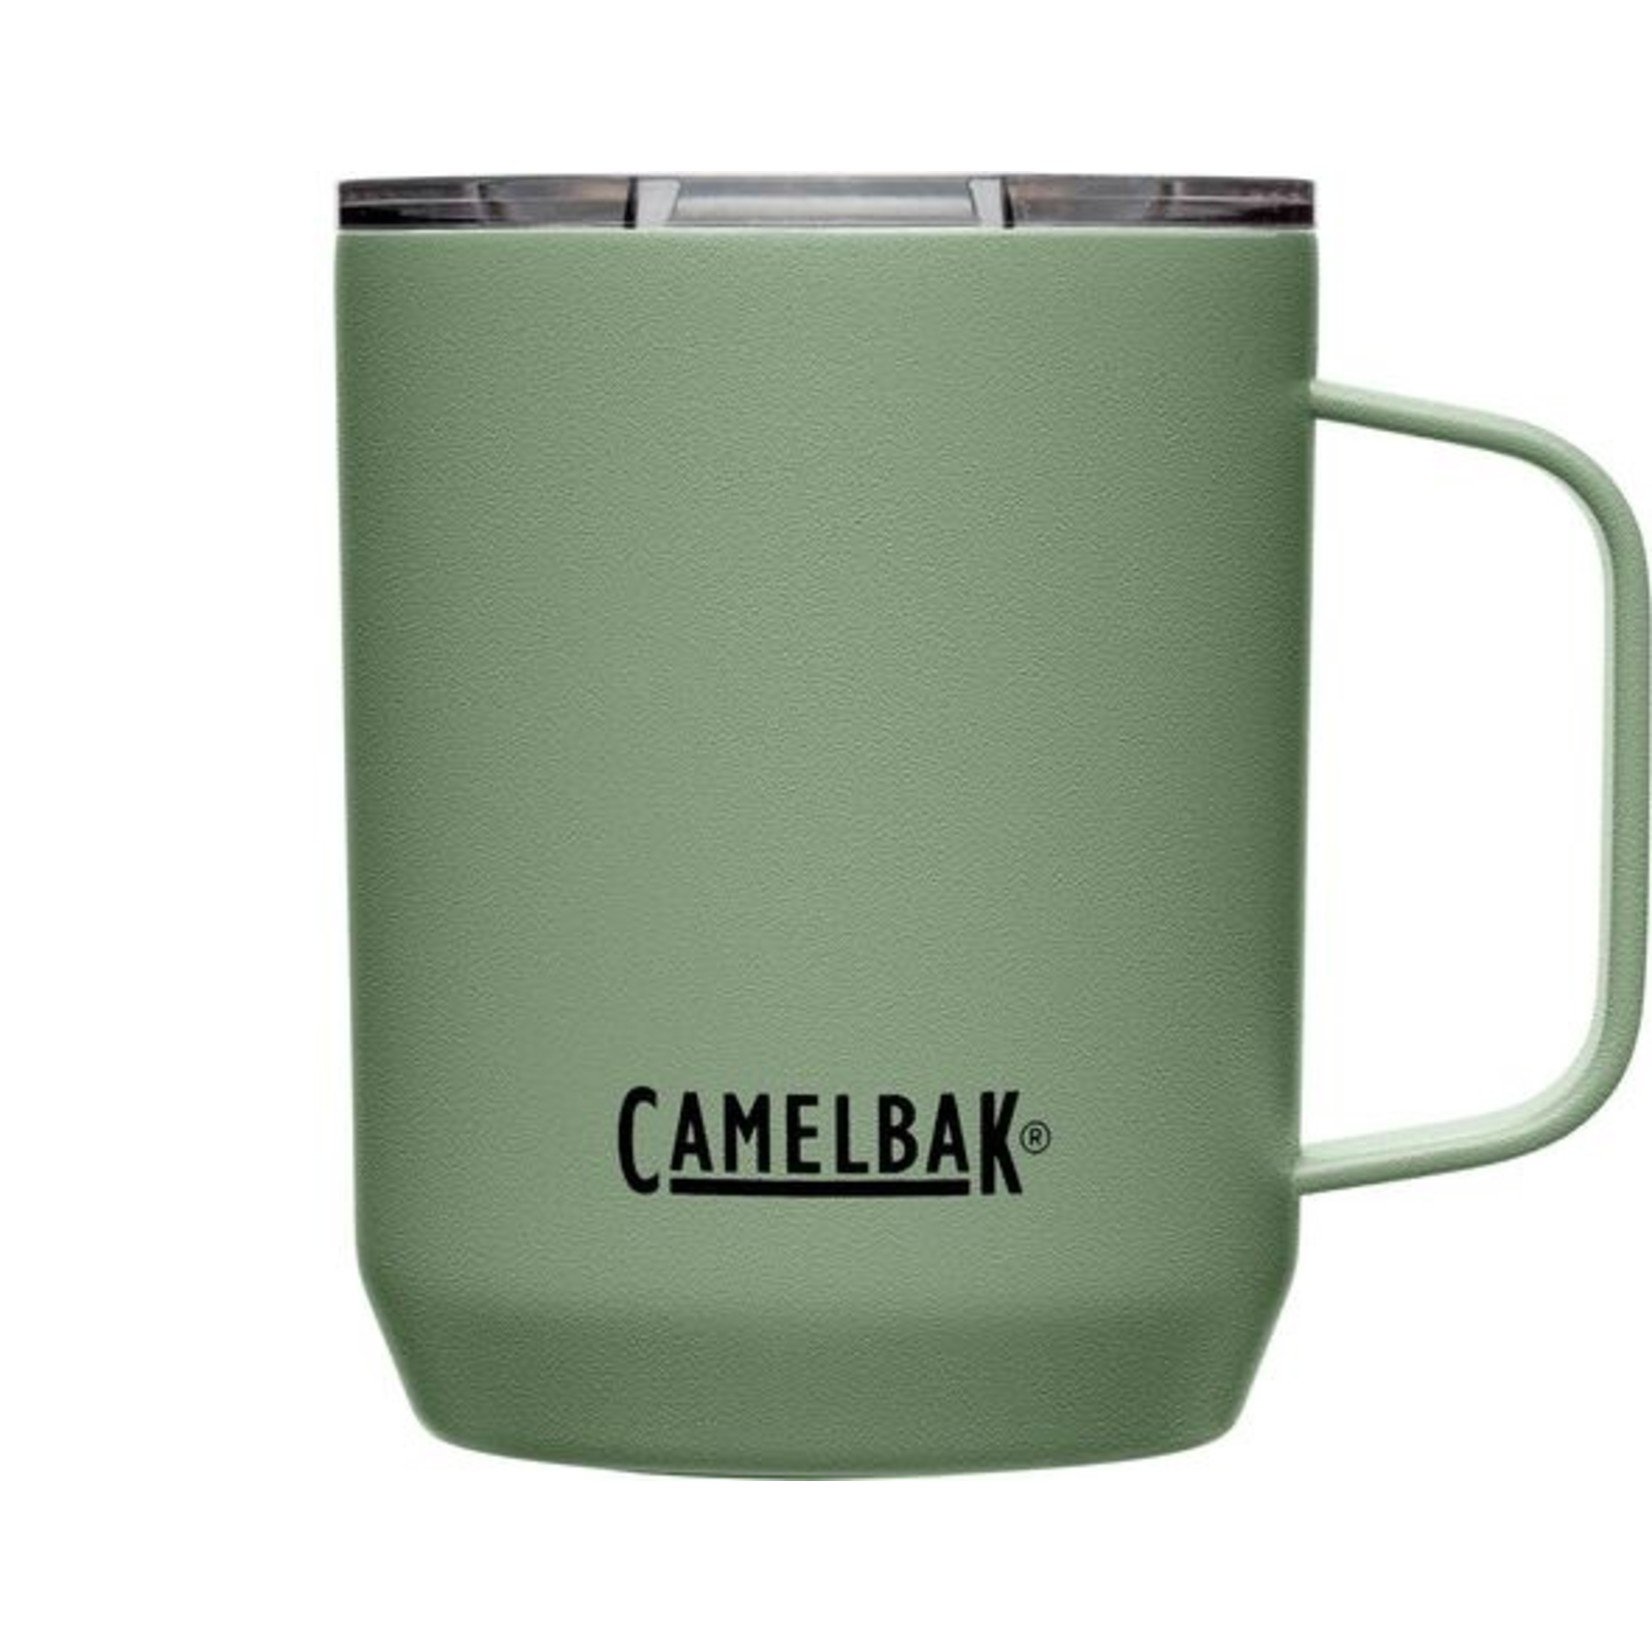 https://cdn.shoplightspeed.com/shops/621397/files/44342746/1652x1652x2/camelbak-camelbak-horizon-12-oz-camp-mug-insulated.jpg